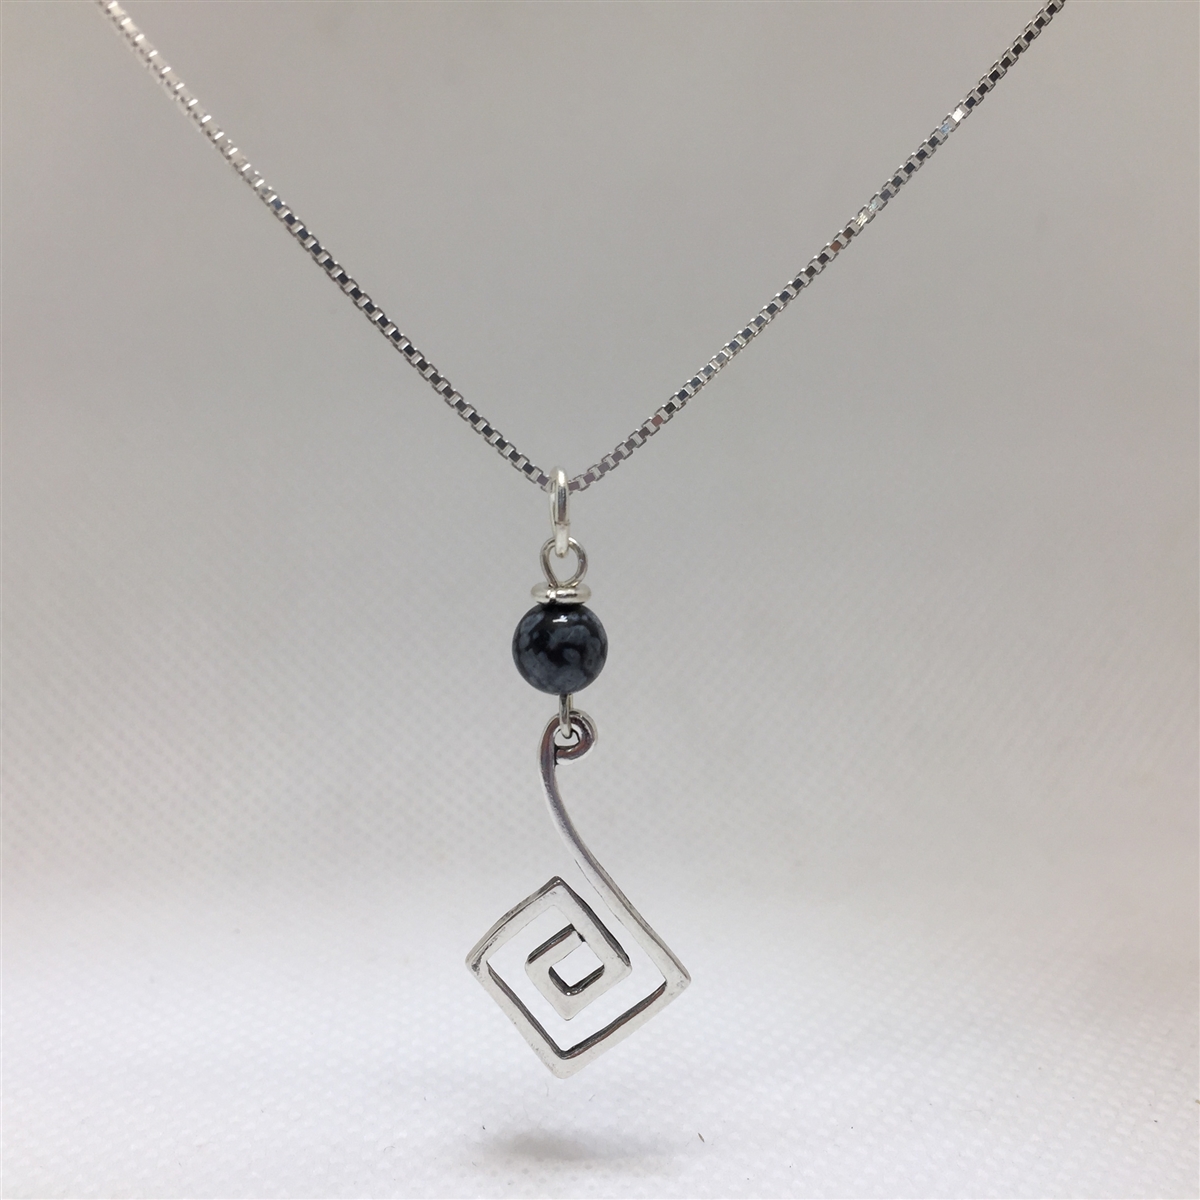 Dark Passage Necklace - Black Onyx and Key Charm on 14kt G… | Flickr